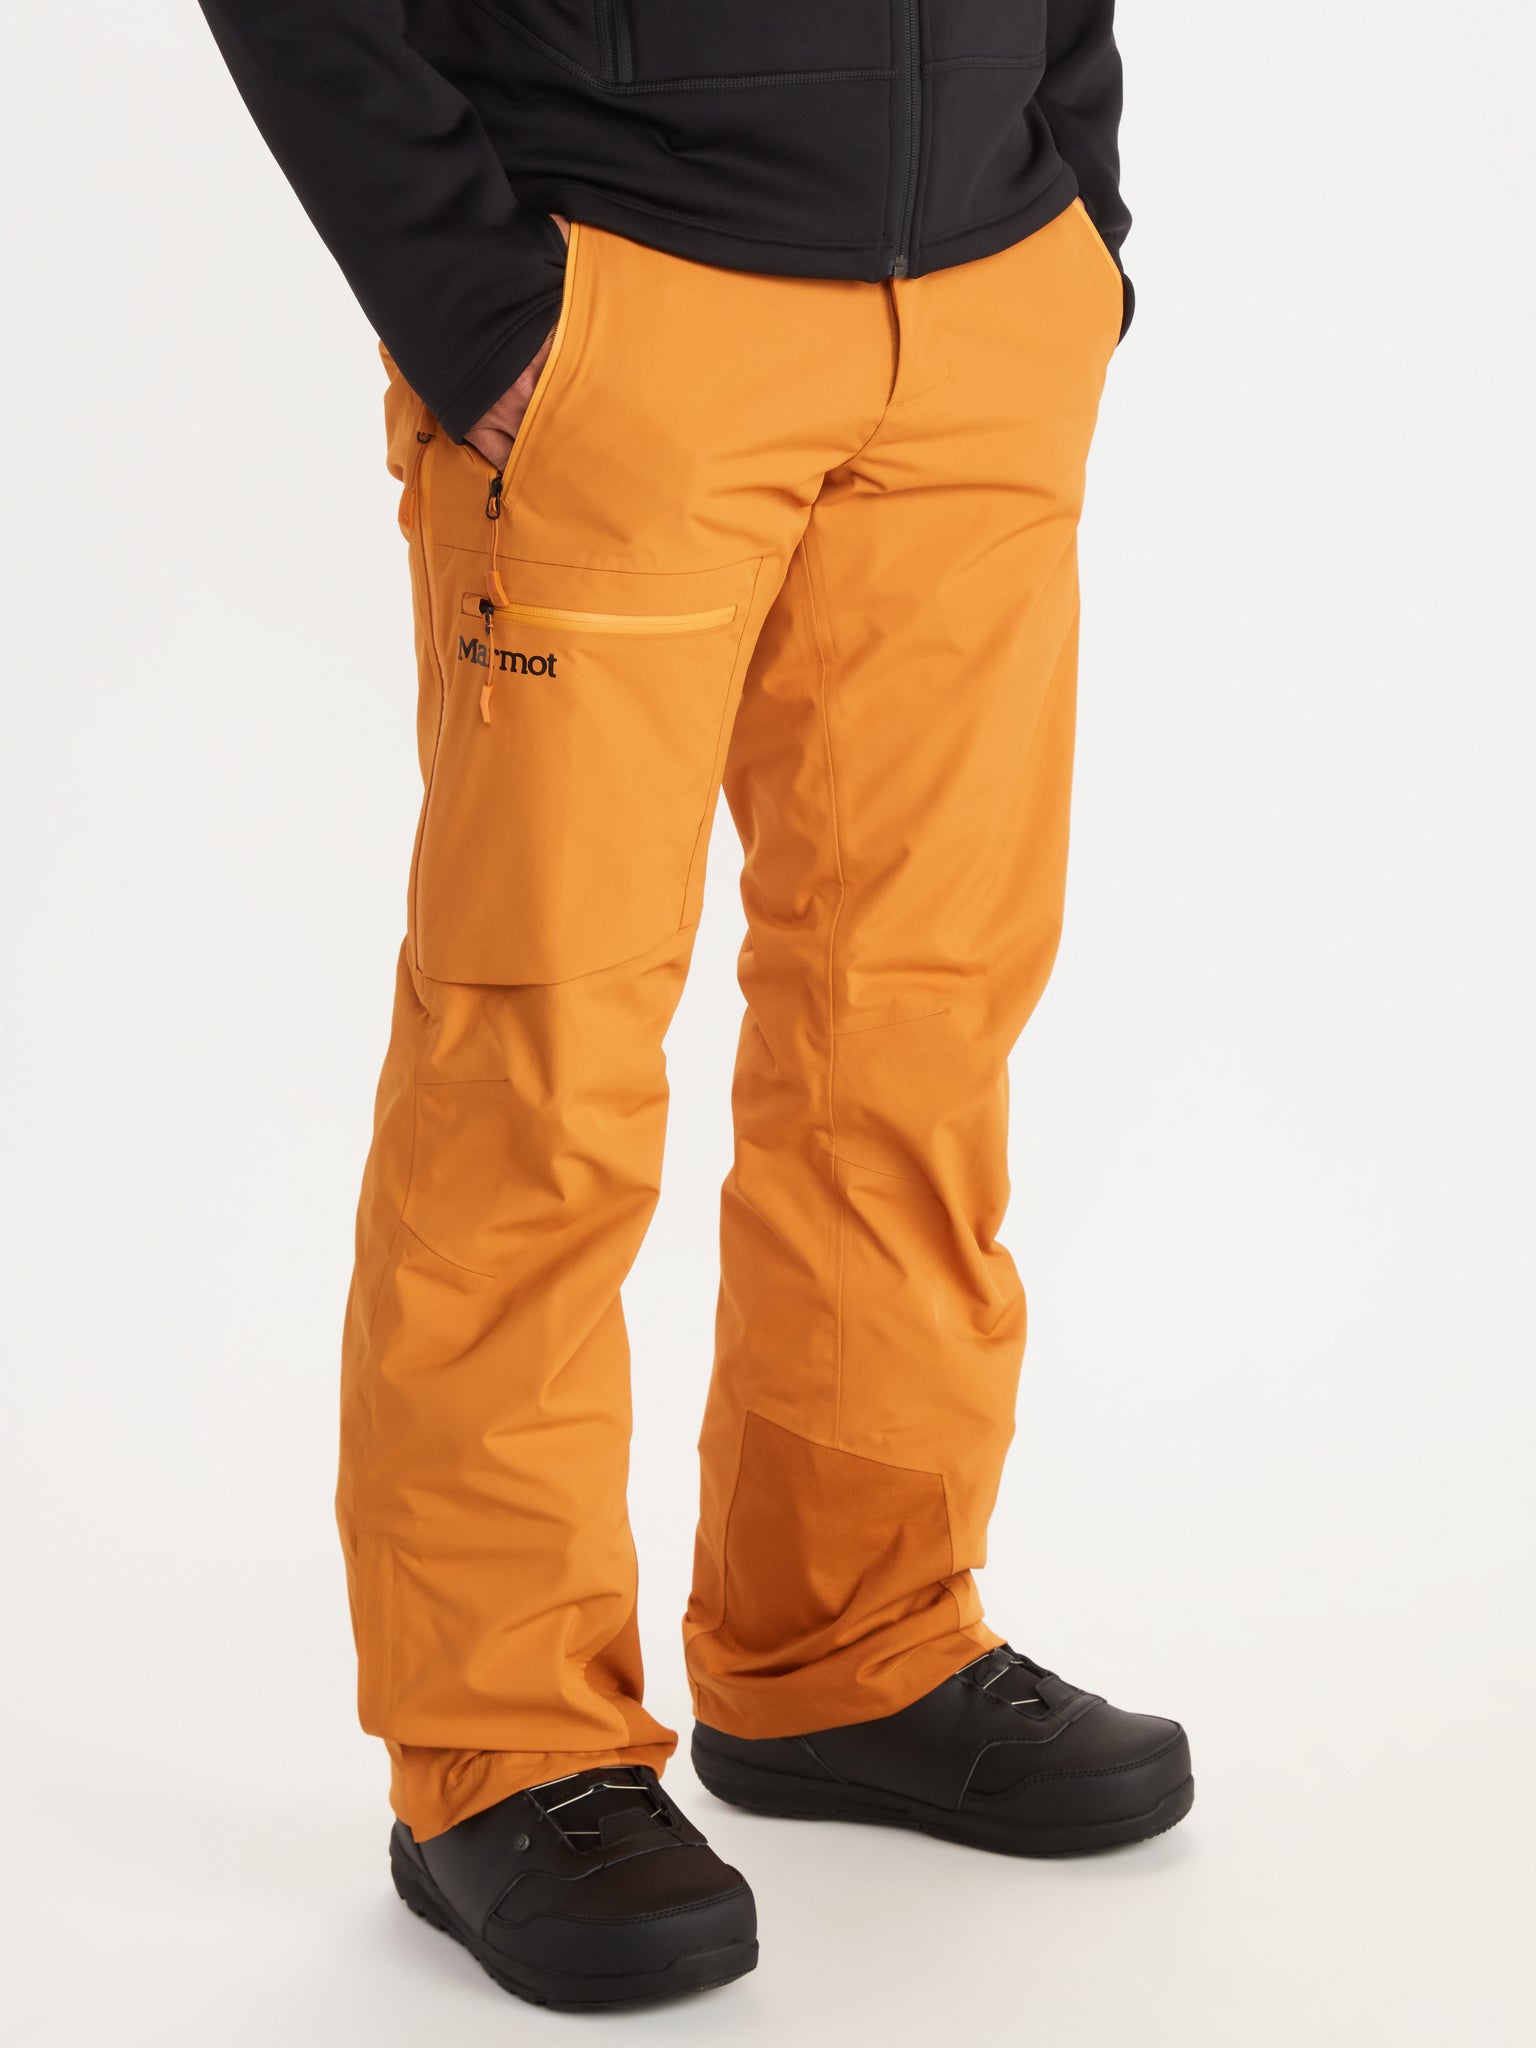 Cubre Pantalon Marmot Impermeable Montaña Nieve Esqui Moto